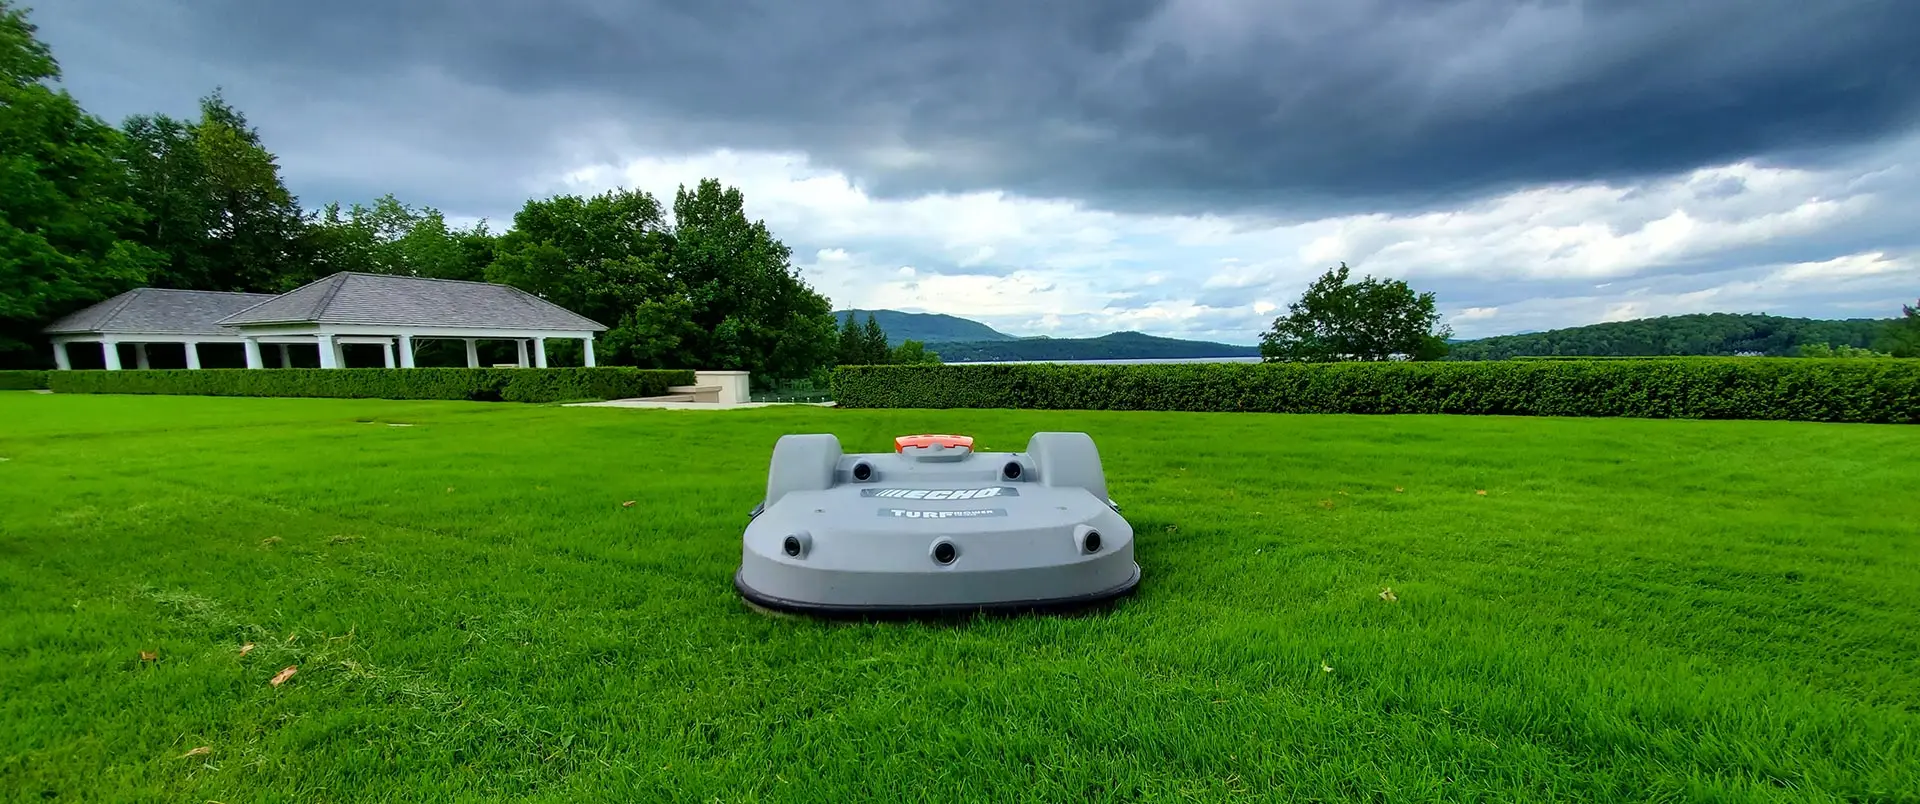 Robotic Lawn Mower & Turf Equipment | Robotics